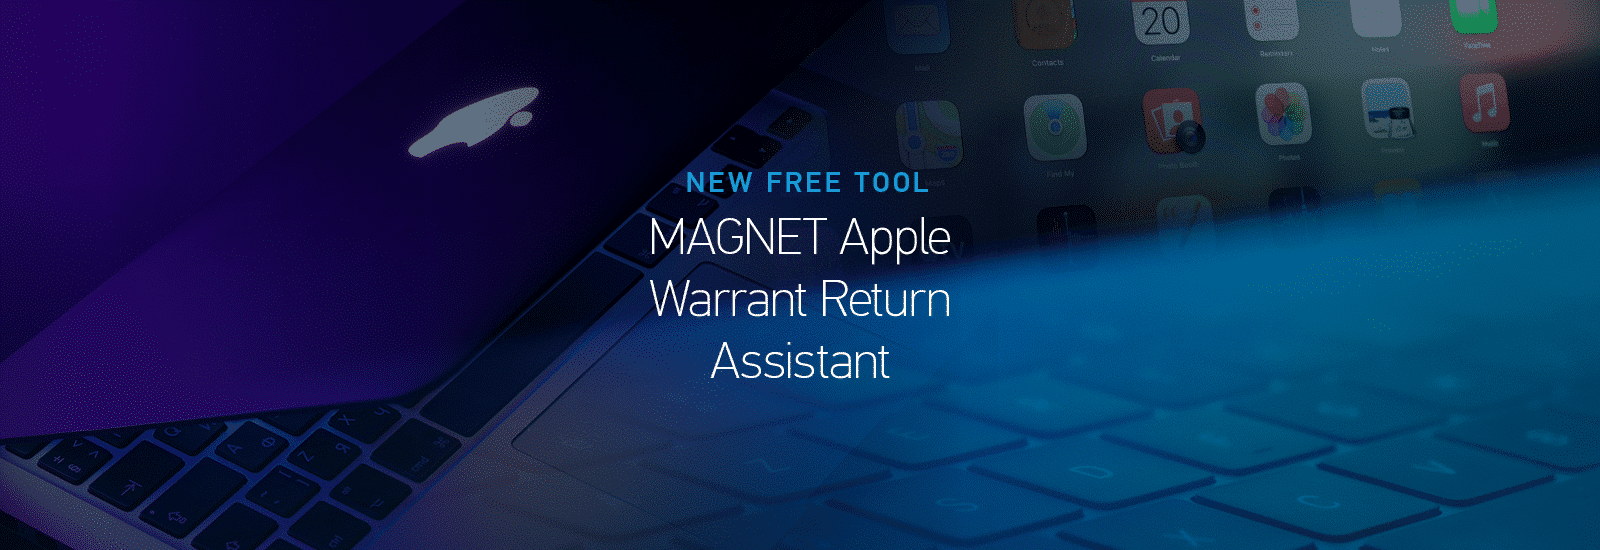 MAGNET Apple Warrant Return Assistant